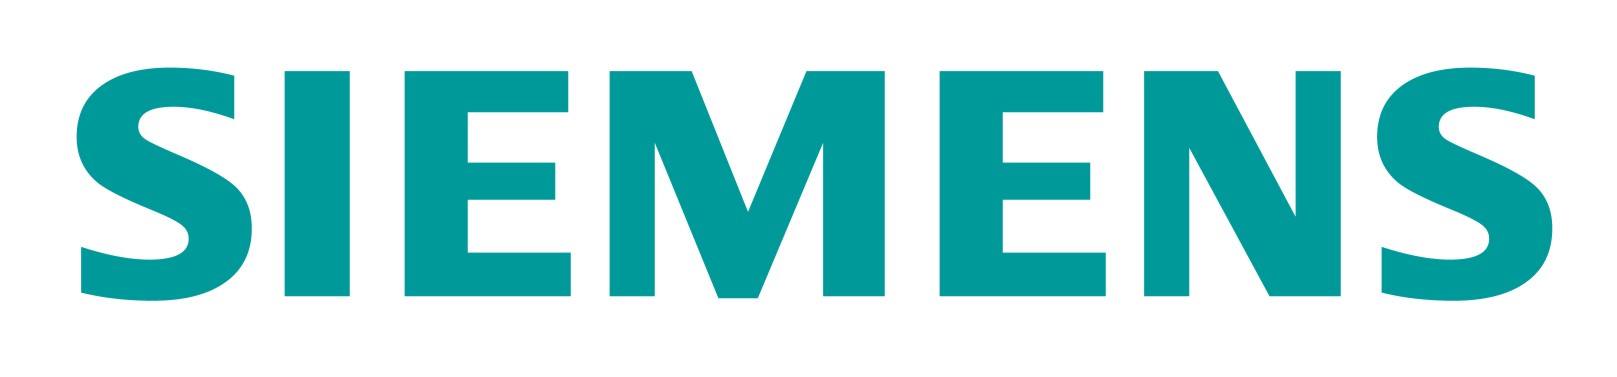 Logo Siemens.jpg